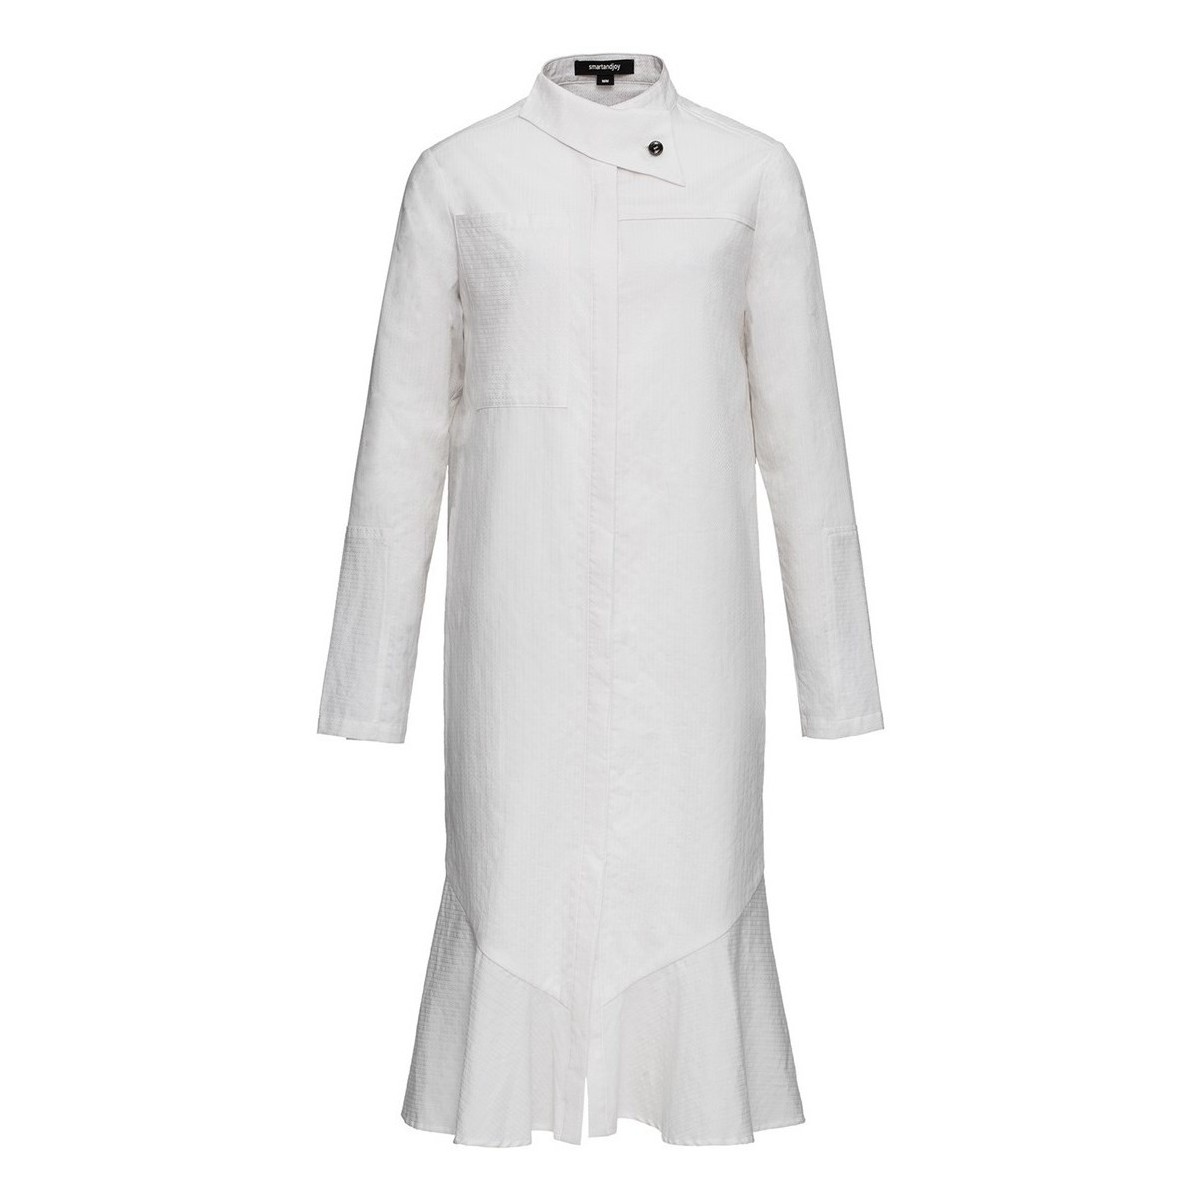 Vêtements Femme Matière principale : 53% Coton, 27%Polyamide, 15% Polyester, 5% Élasthanne Corosole Blanc